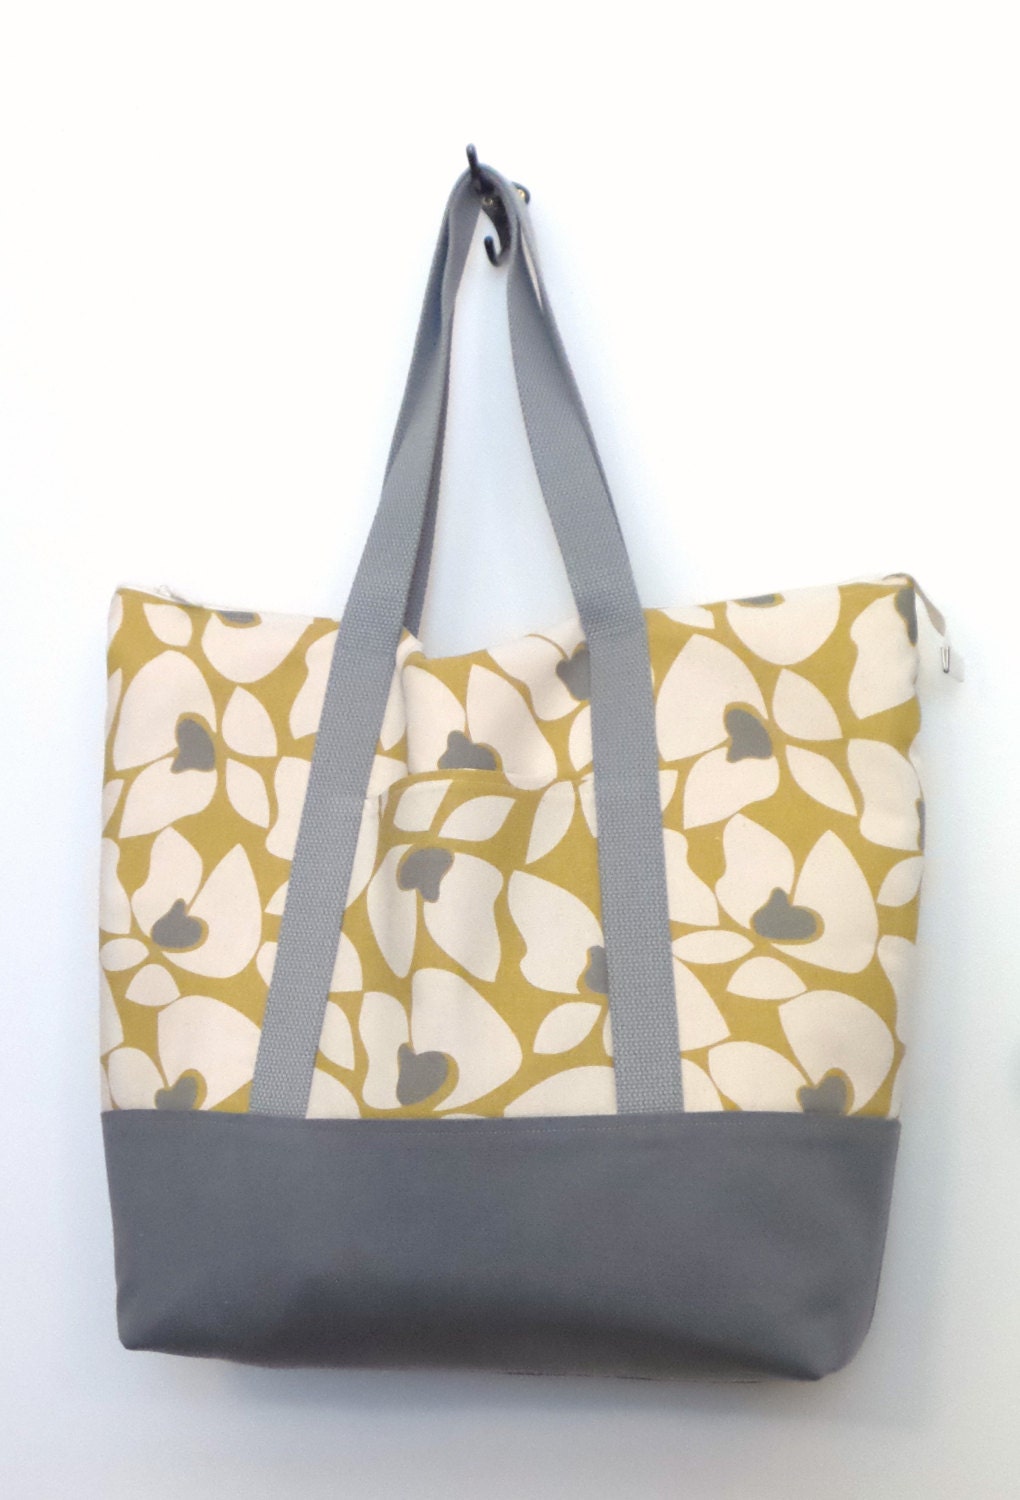 Large Zippered Tote Bag / Gym Bag / Travel Bag / by bettyscorner